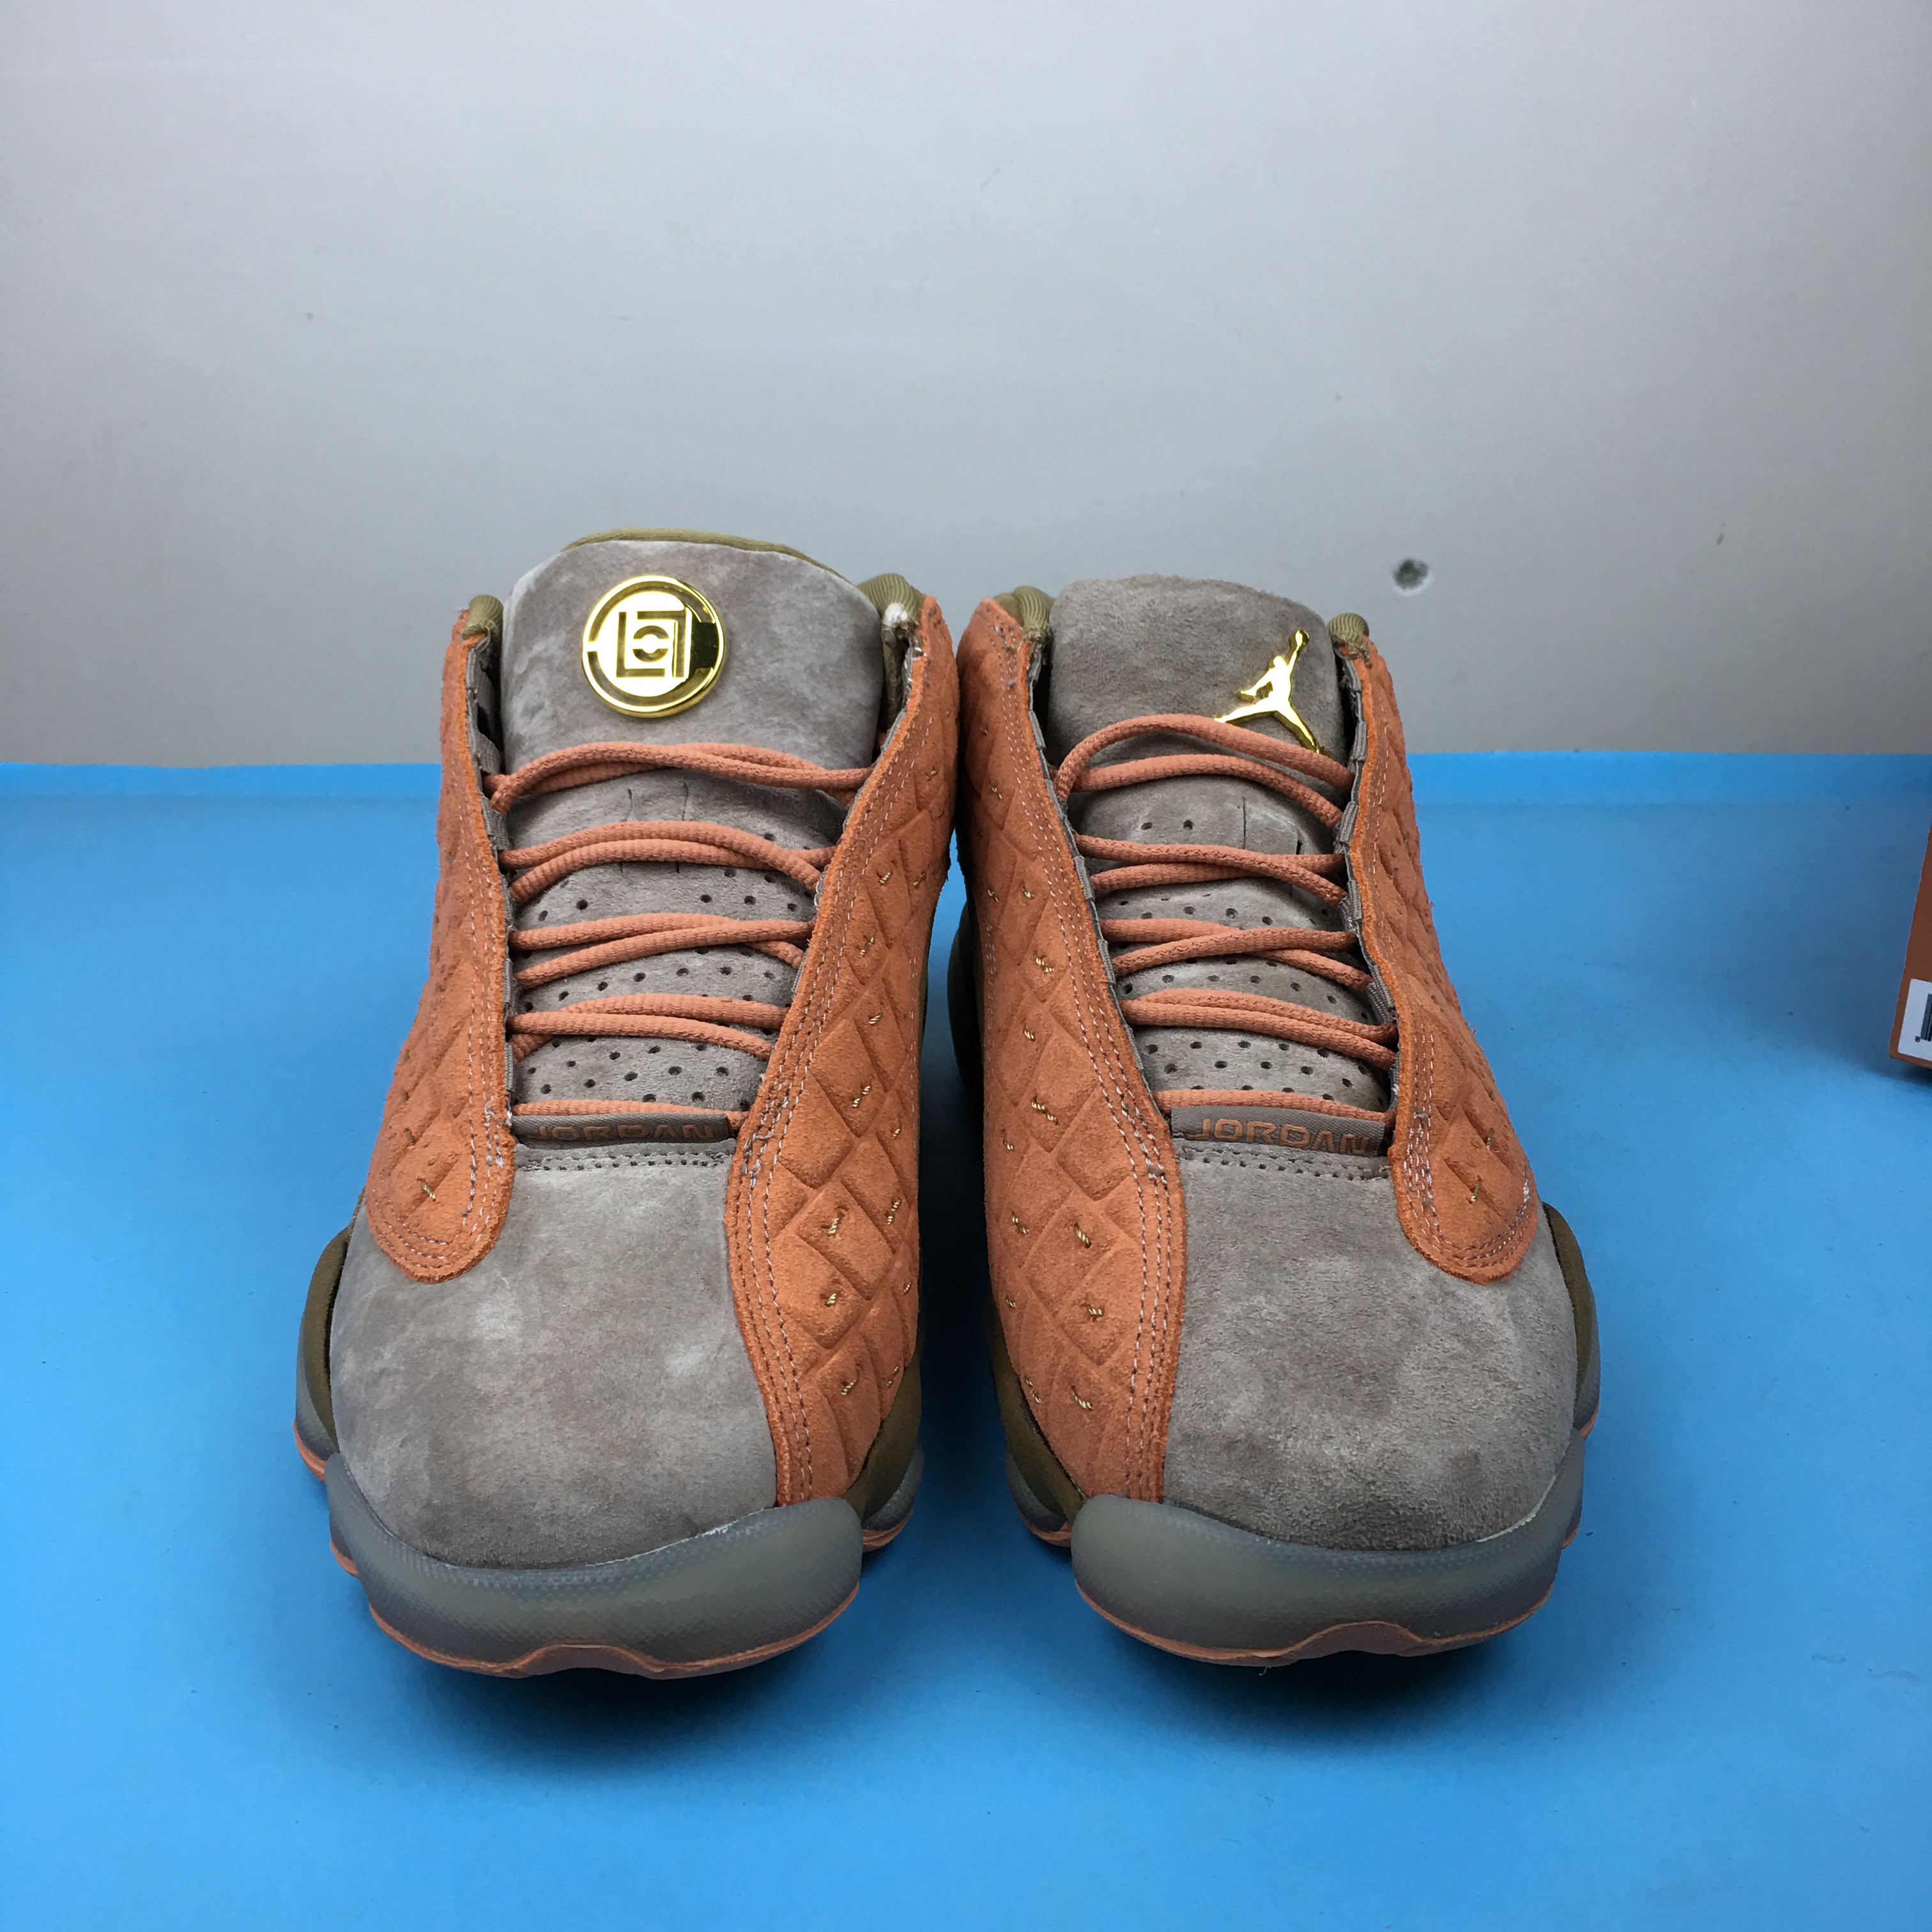 CLOT x Air Jordan 13 Low Grey Orange Brown Shoes - Click Image to Close